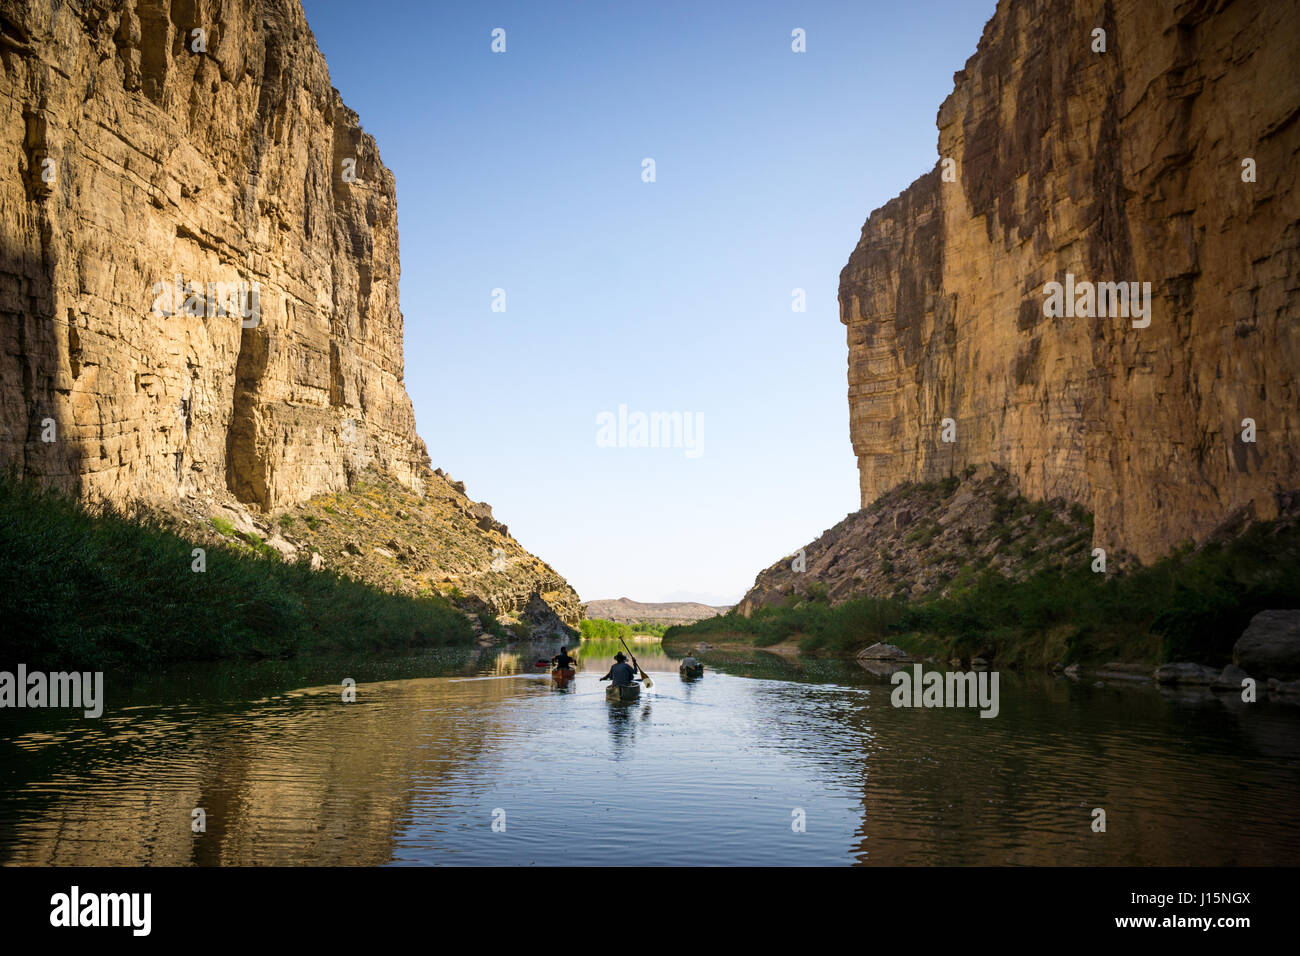 Canoeing down Santa Elena canyon, Rio Grande river, Big Bend National Park, Texas. Stock Photo